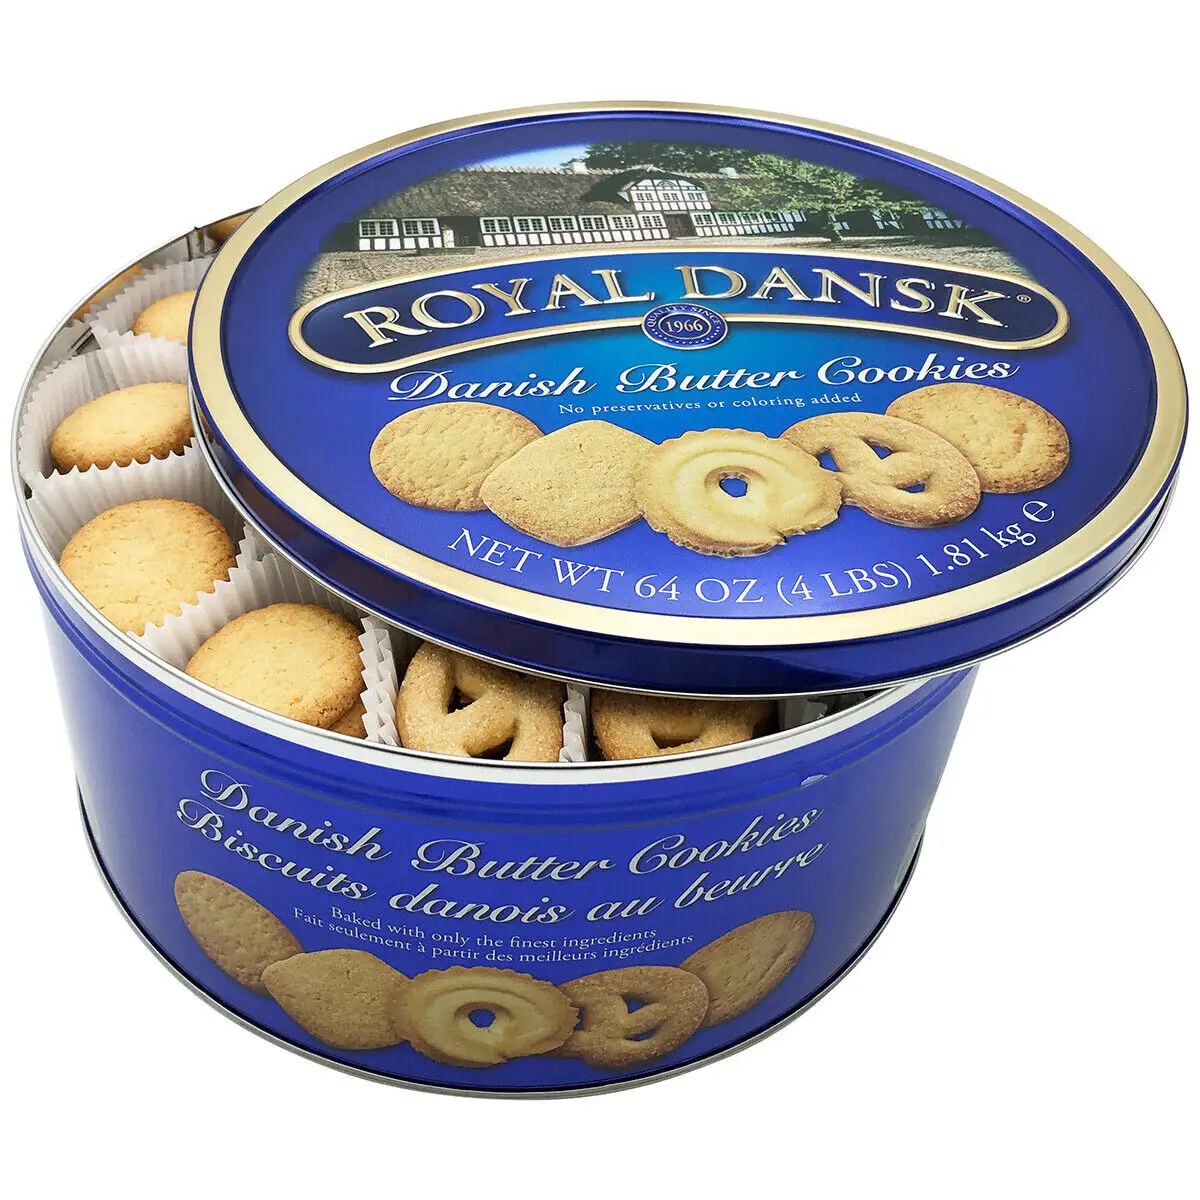 Royal Dansk Danish Butter Cookies- 12 Ounce Tins (Pack of 4)/Royal Dansk Danish Butter Cookies 24 Oz. (1.5 Lb) 681 Grams